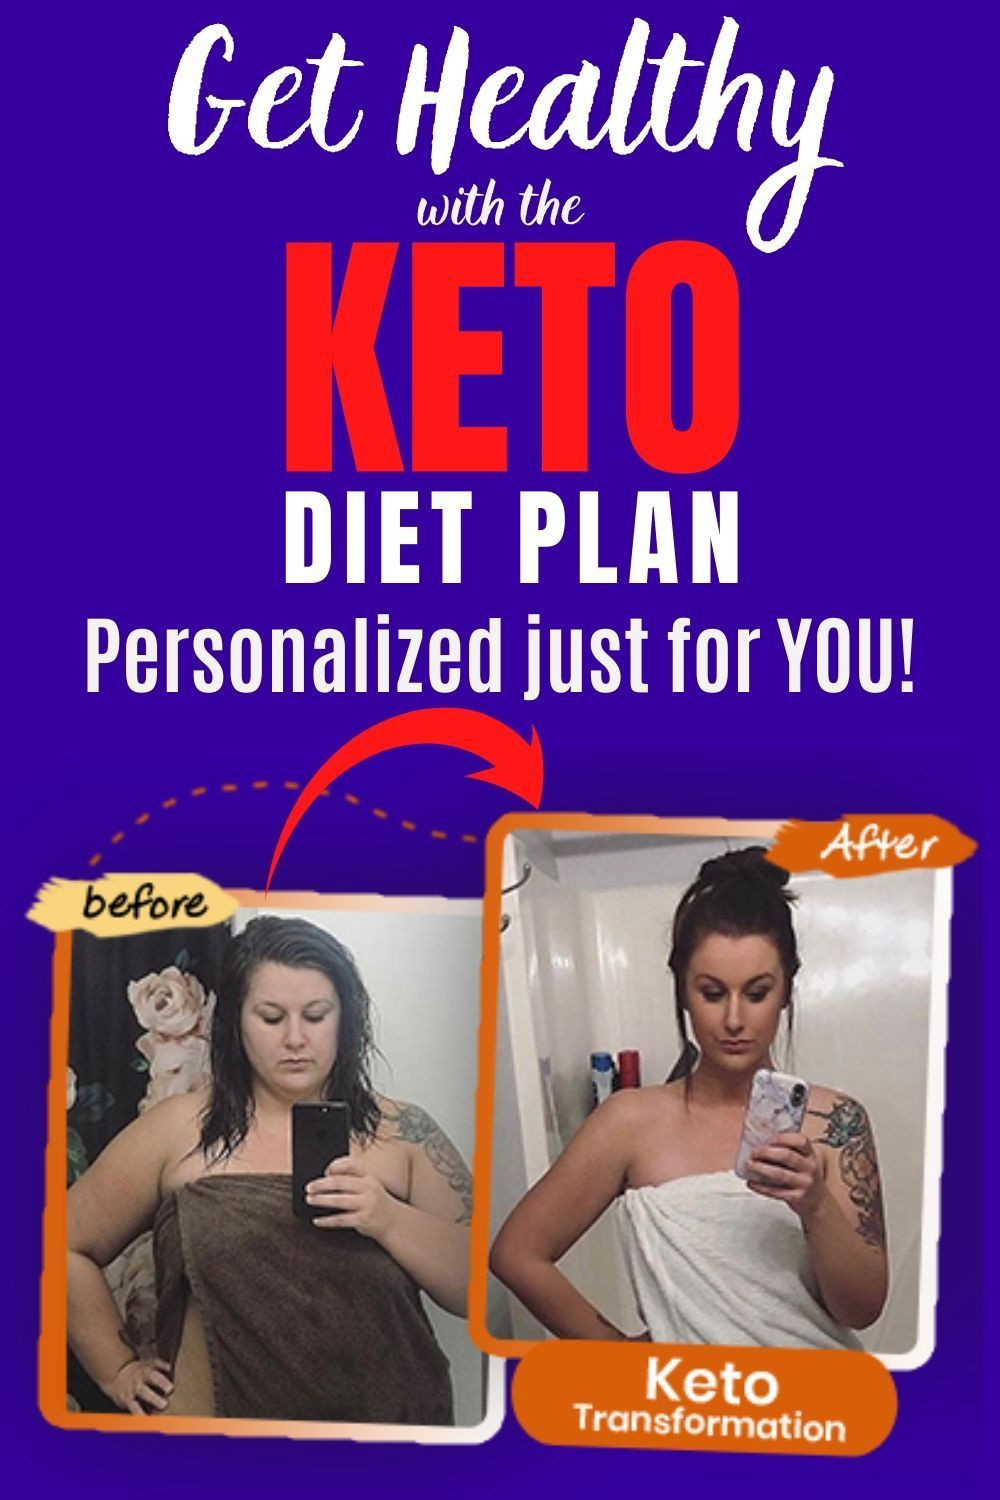 Get Your Custom Keto Diet Plan
 Custom Keto Diet Plan in 2020